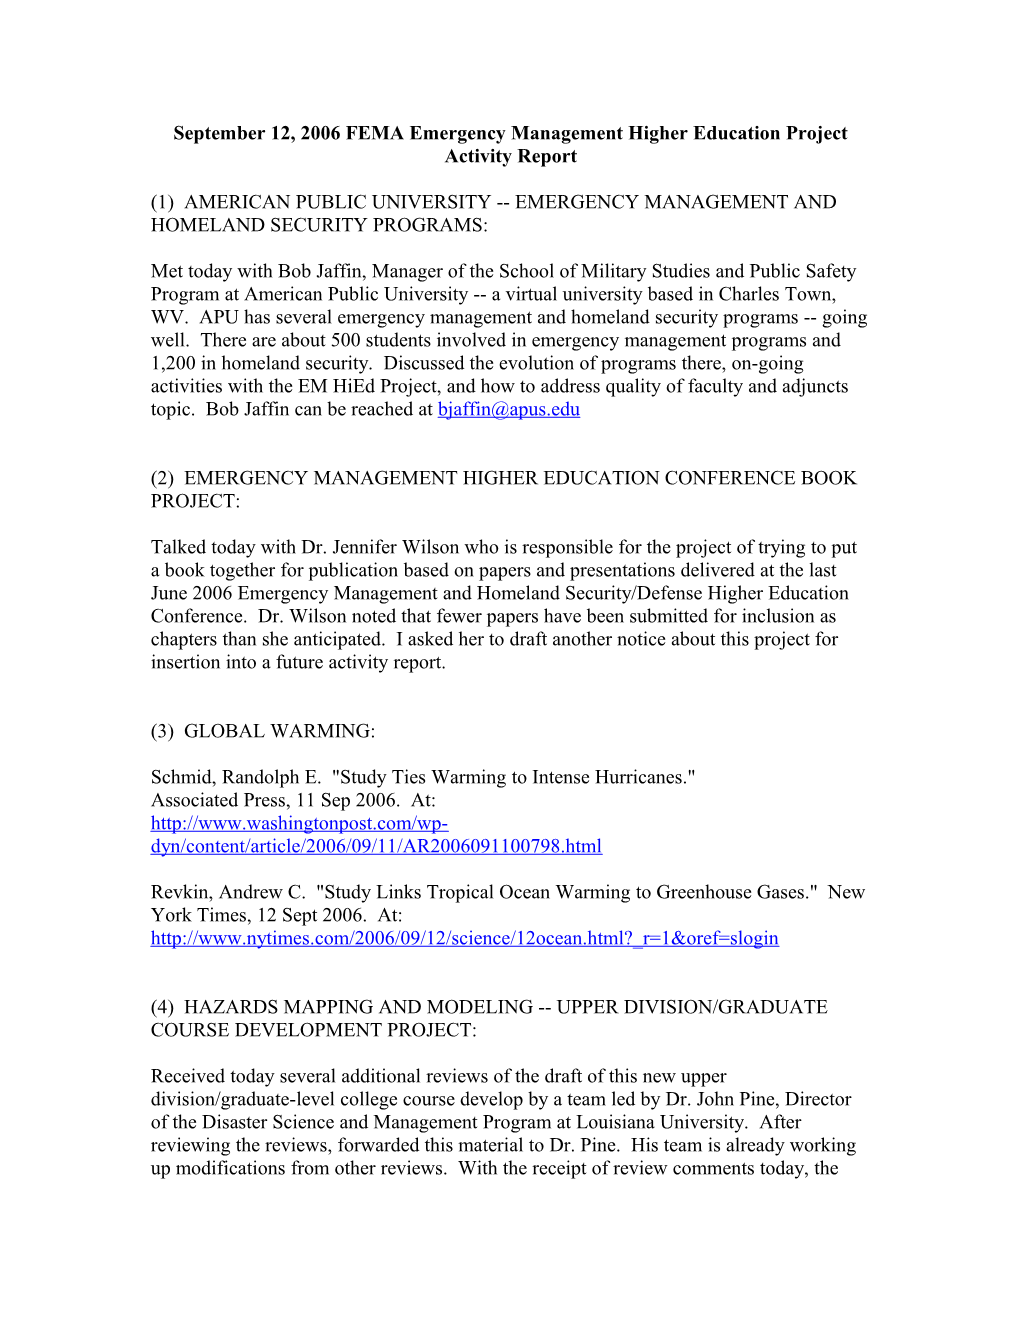 September 12, 2006 FEMA Emergency Management Higher Education Project Activity Report